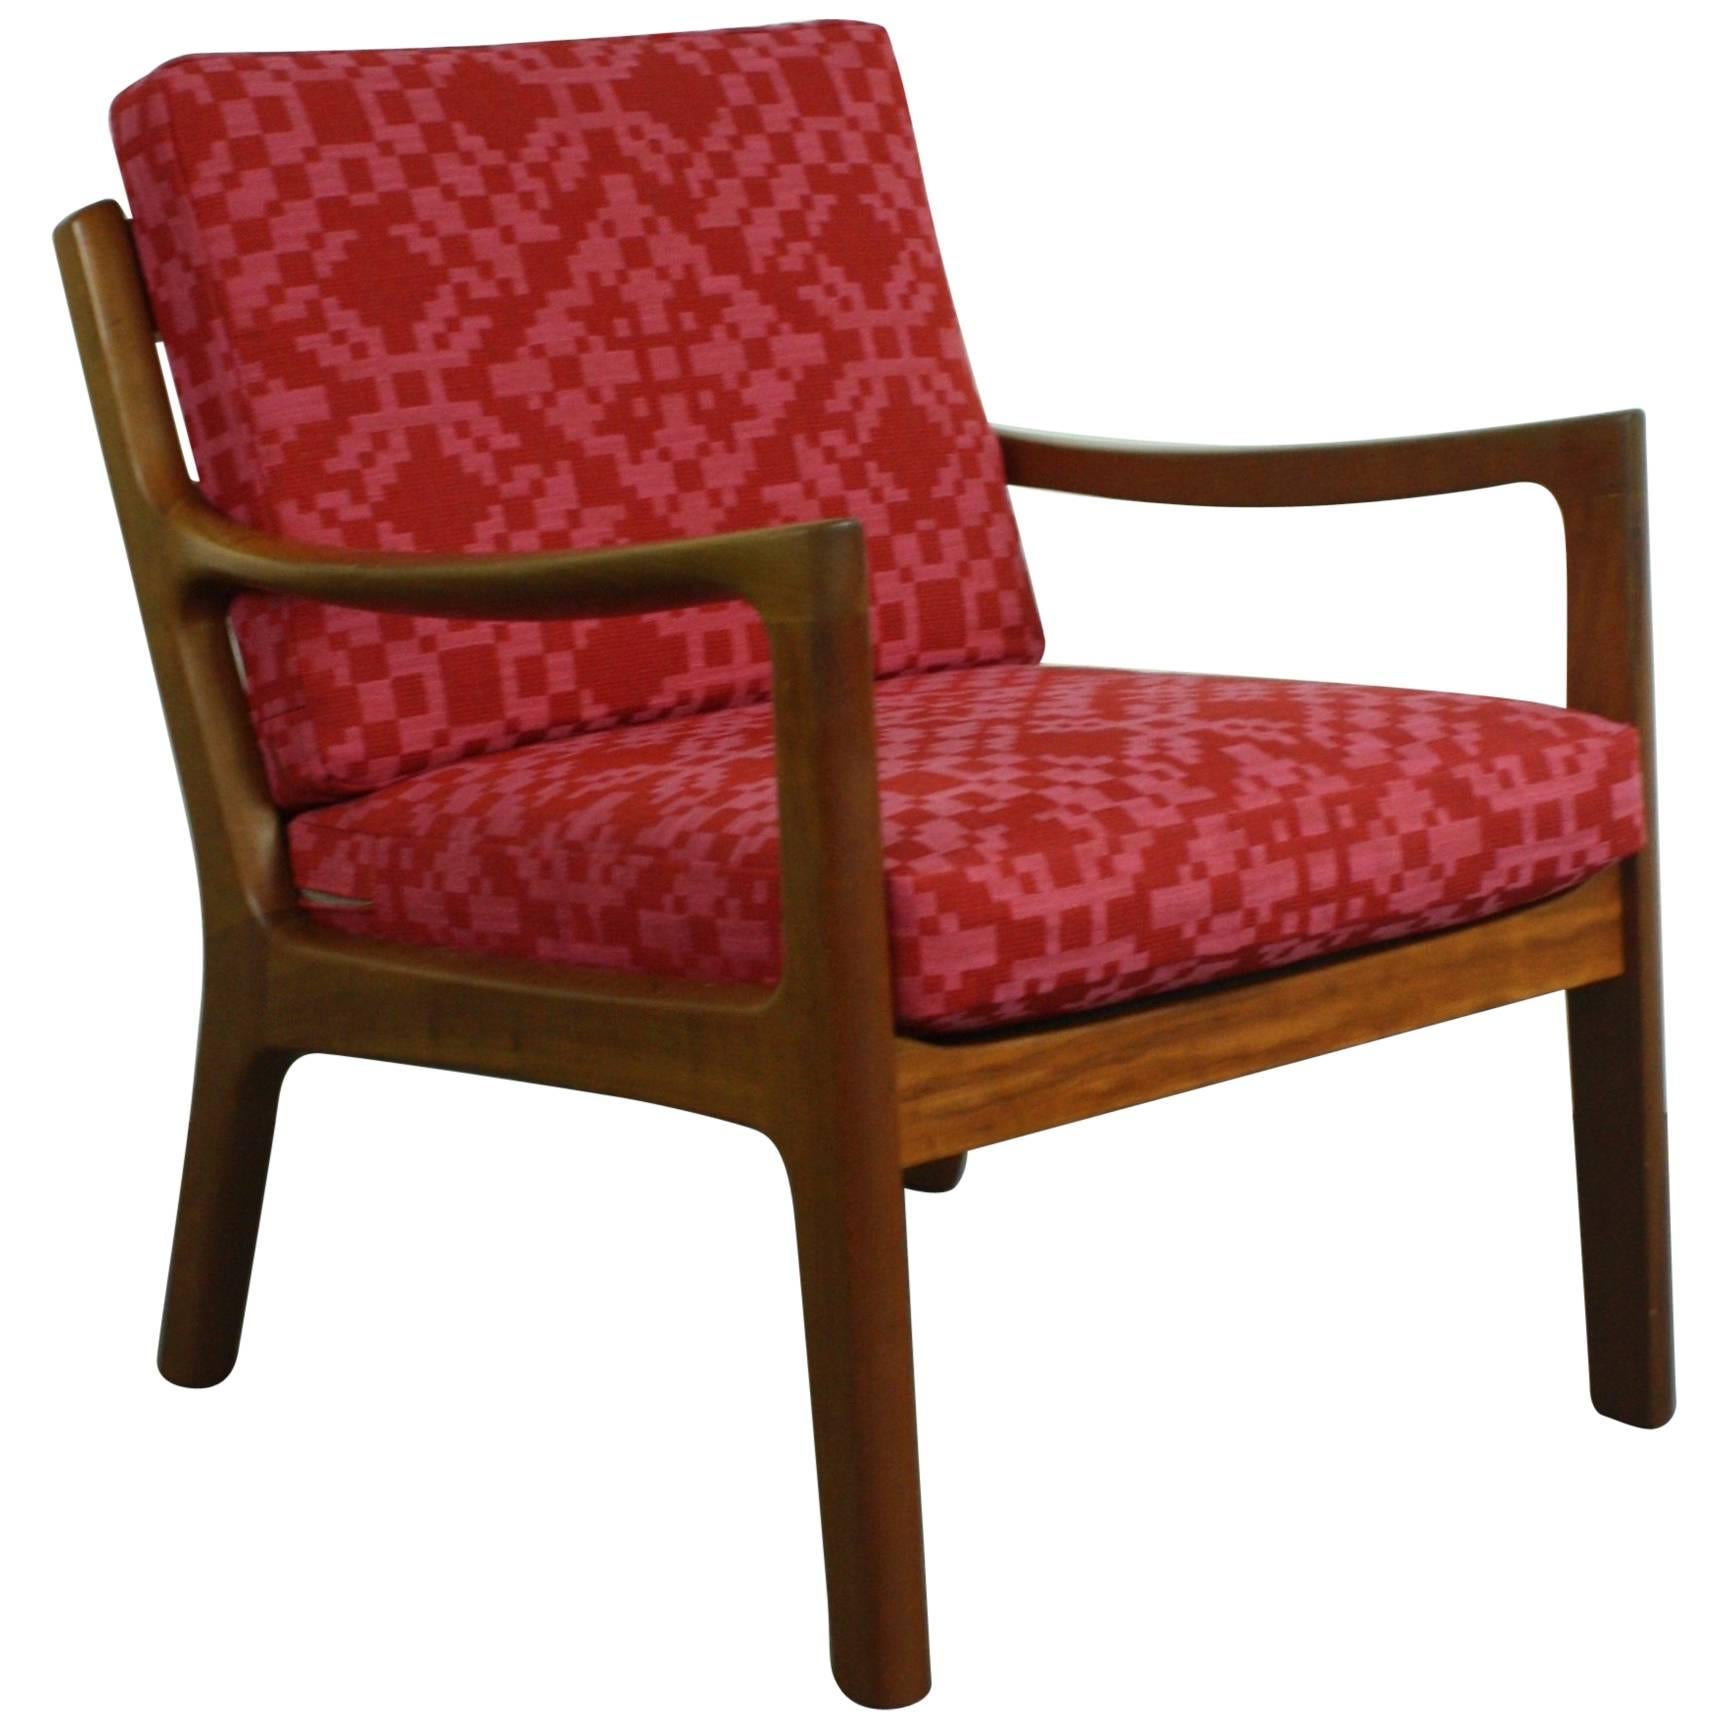 Ole Wanscher for France & Son, Denmark, 1960s Teak Lounge Chair Geo Upholstery For Sale